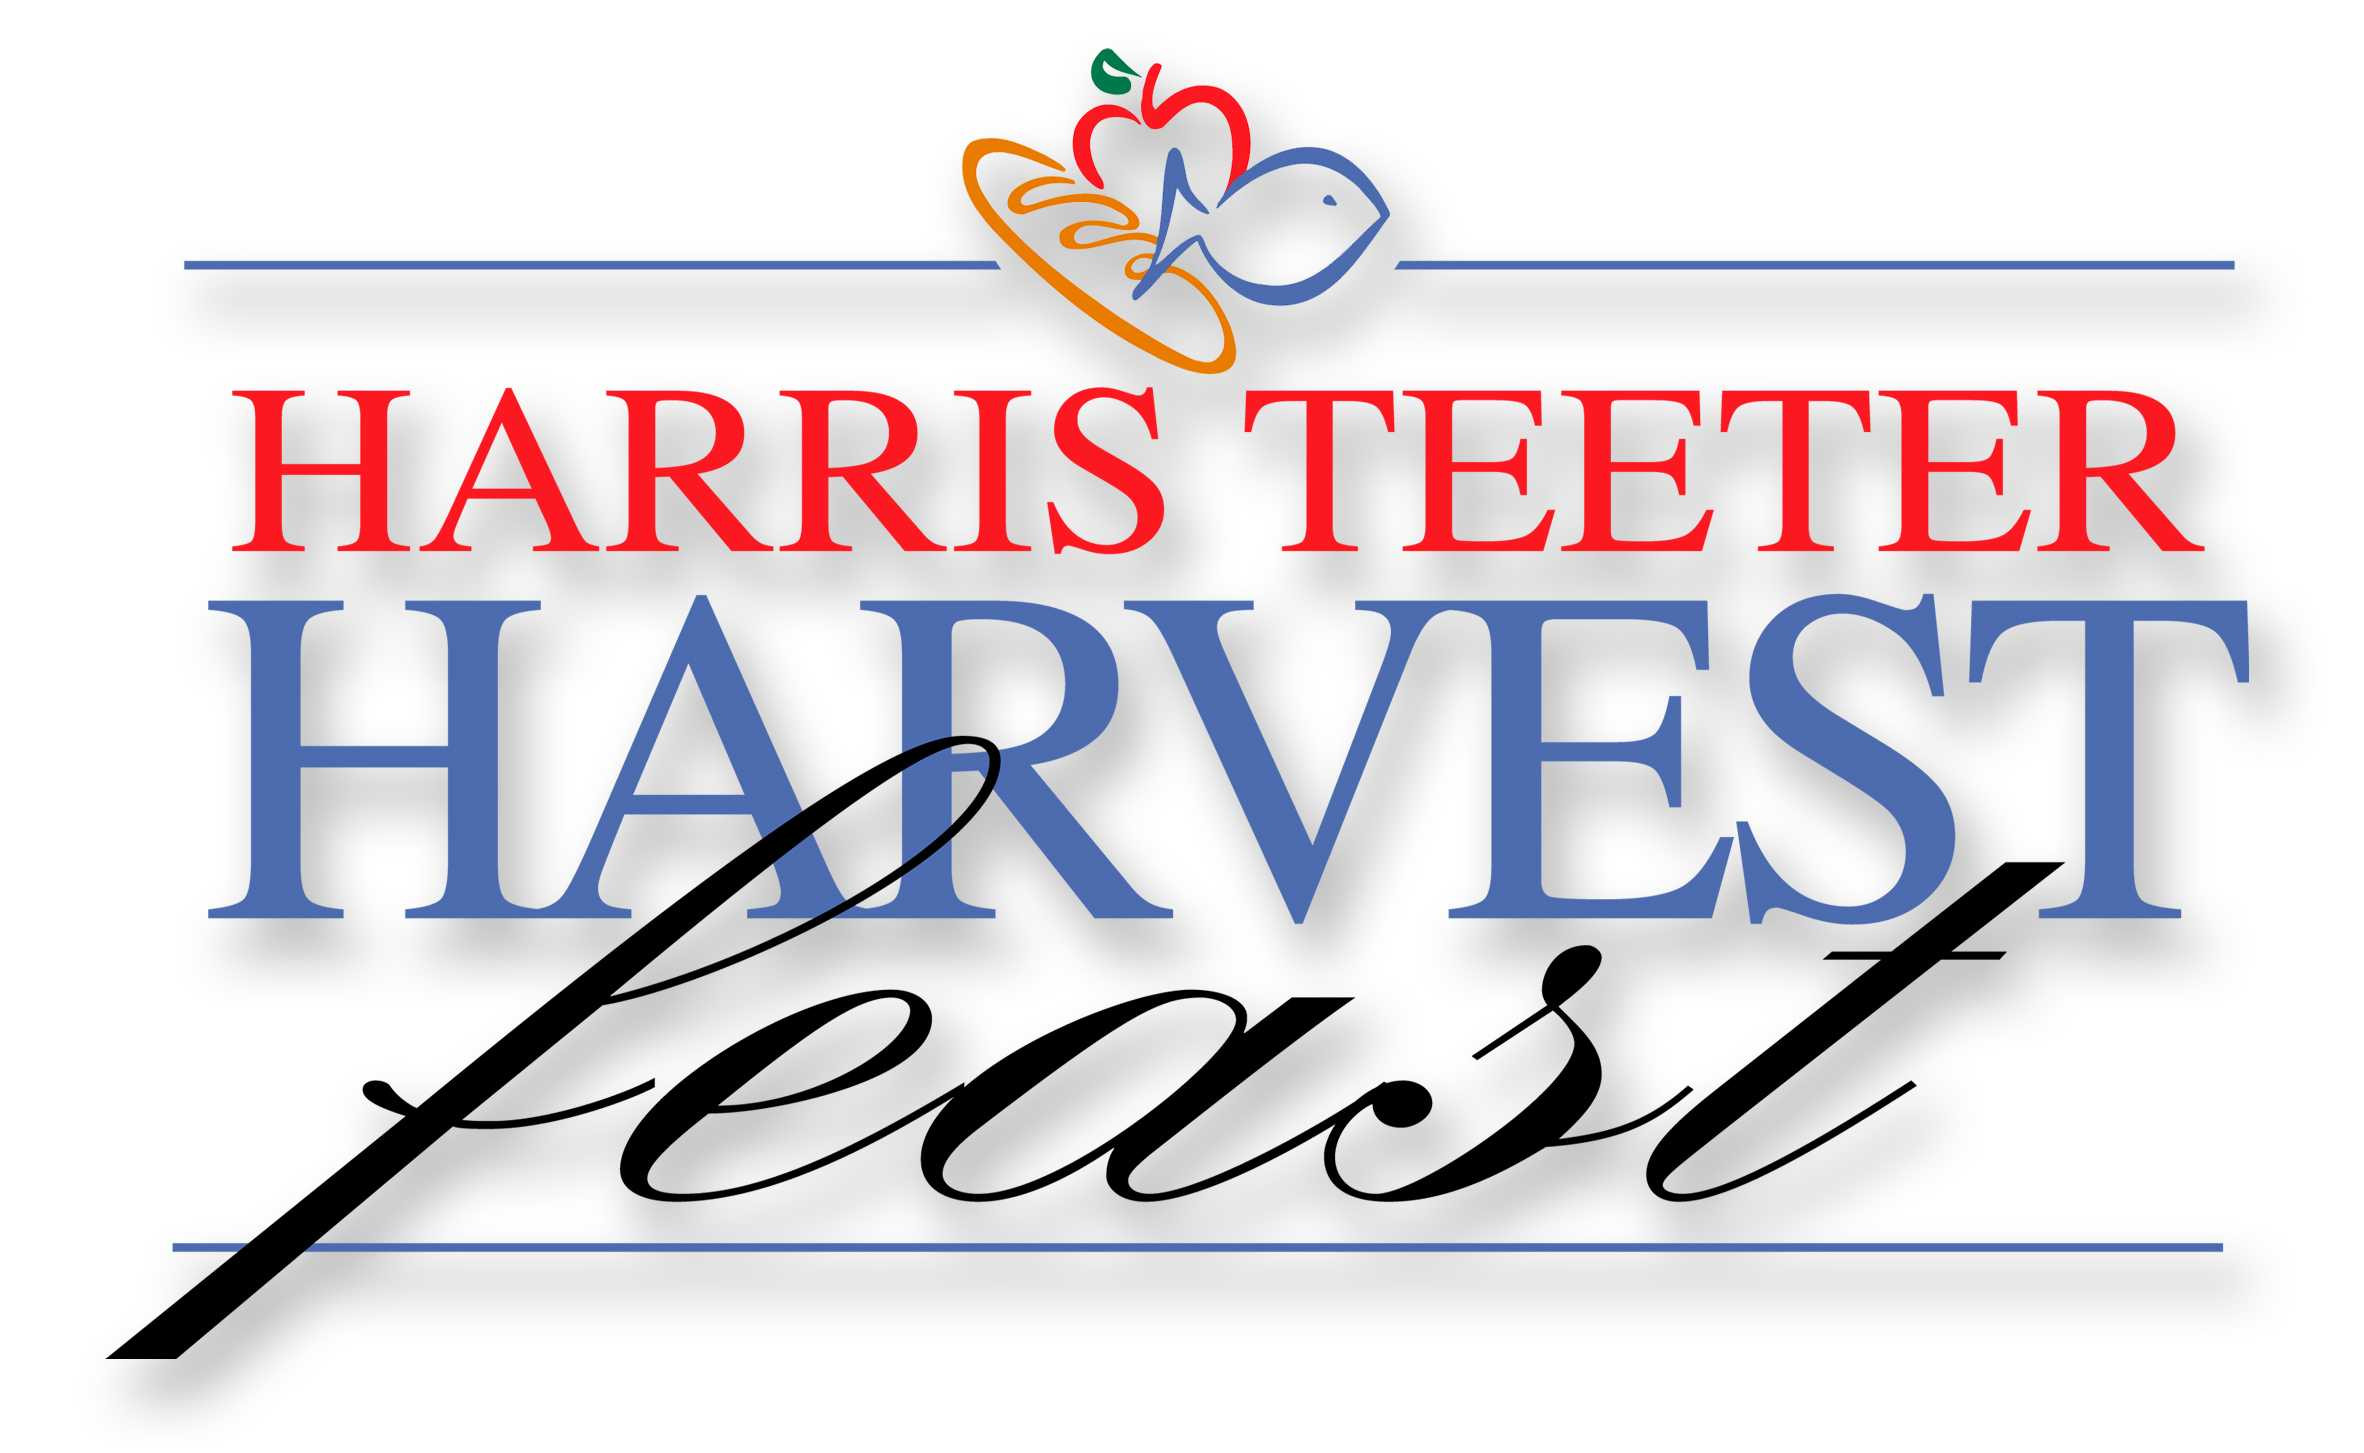 Harris Teeter Thanksgiving Dinner 2019
 Harris Teeter Second Harvest to Assemble Harvest Feast